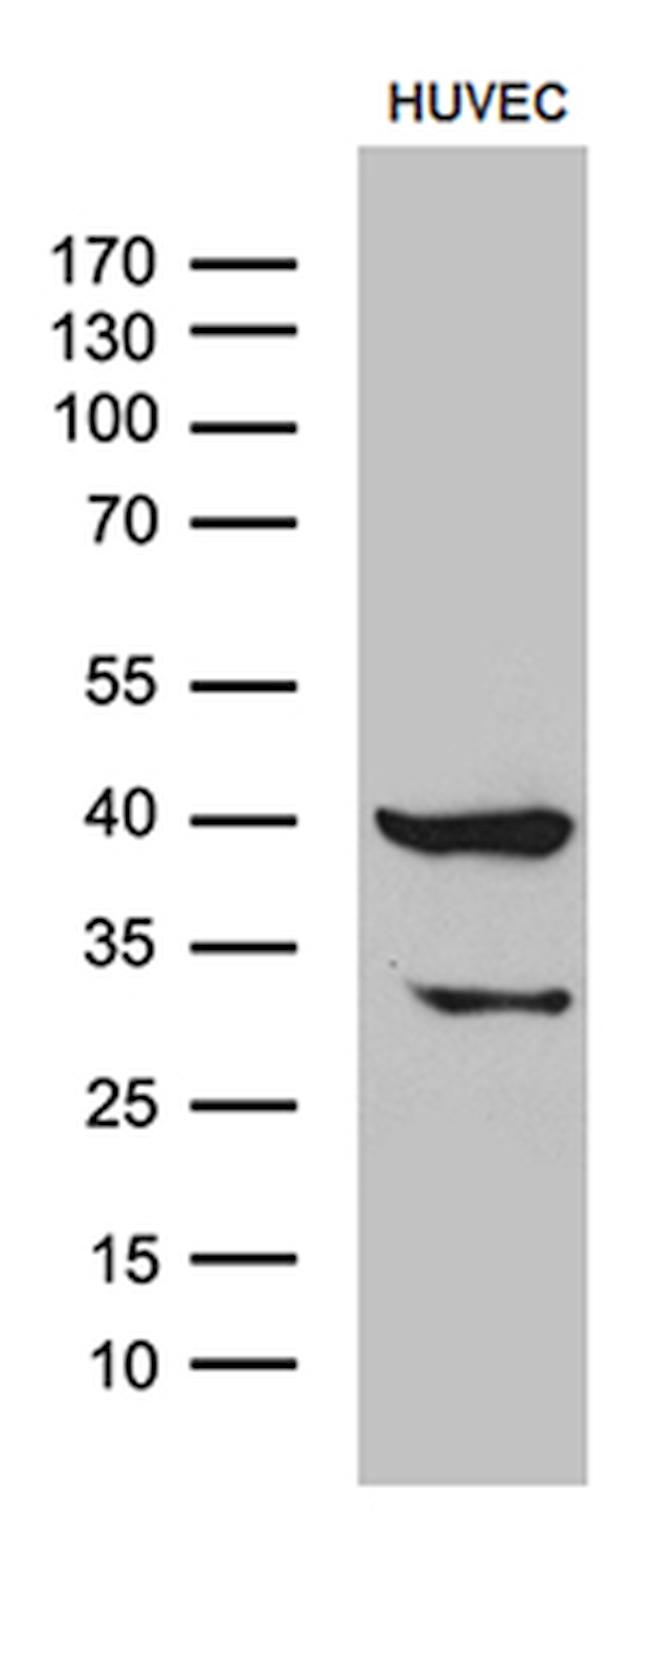 GNA14 Antibody in Western Blot (WB)